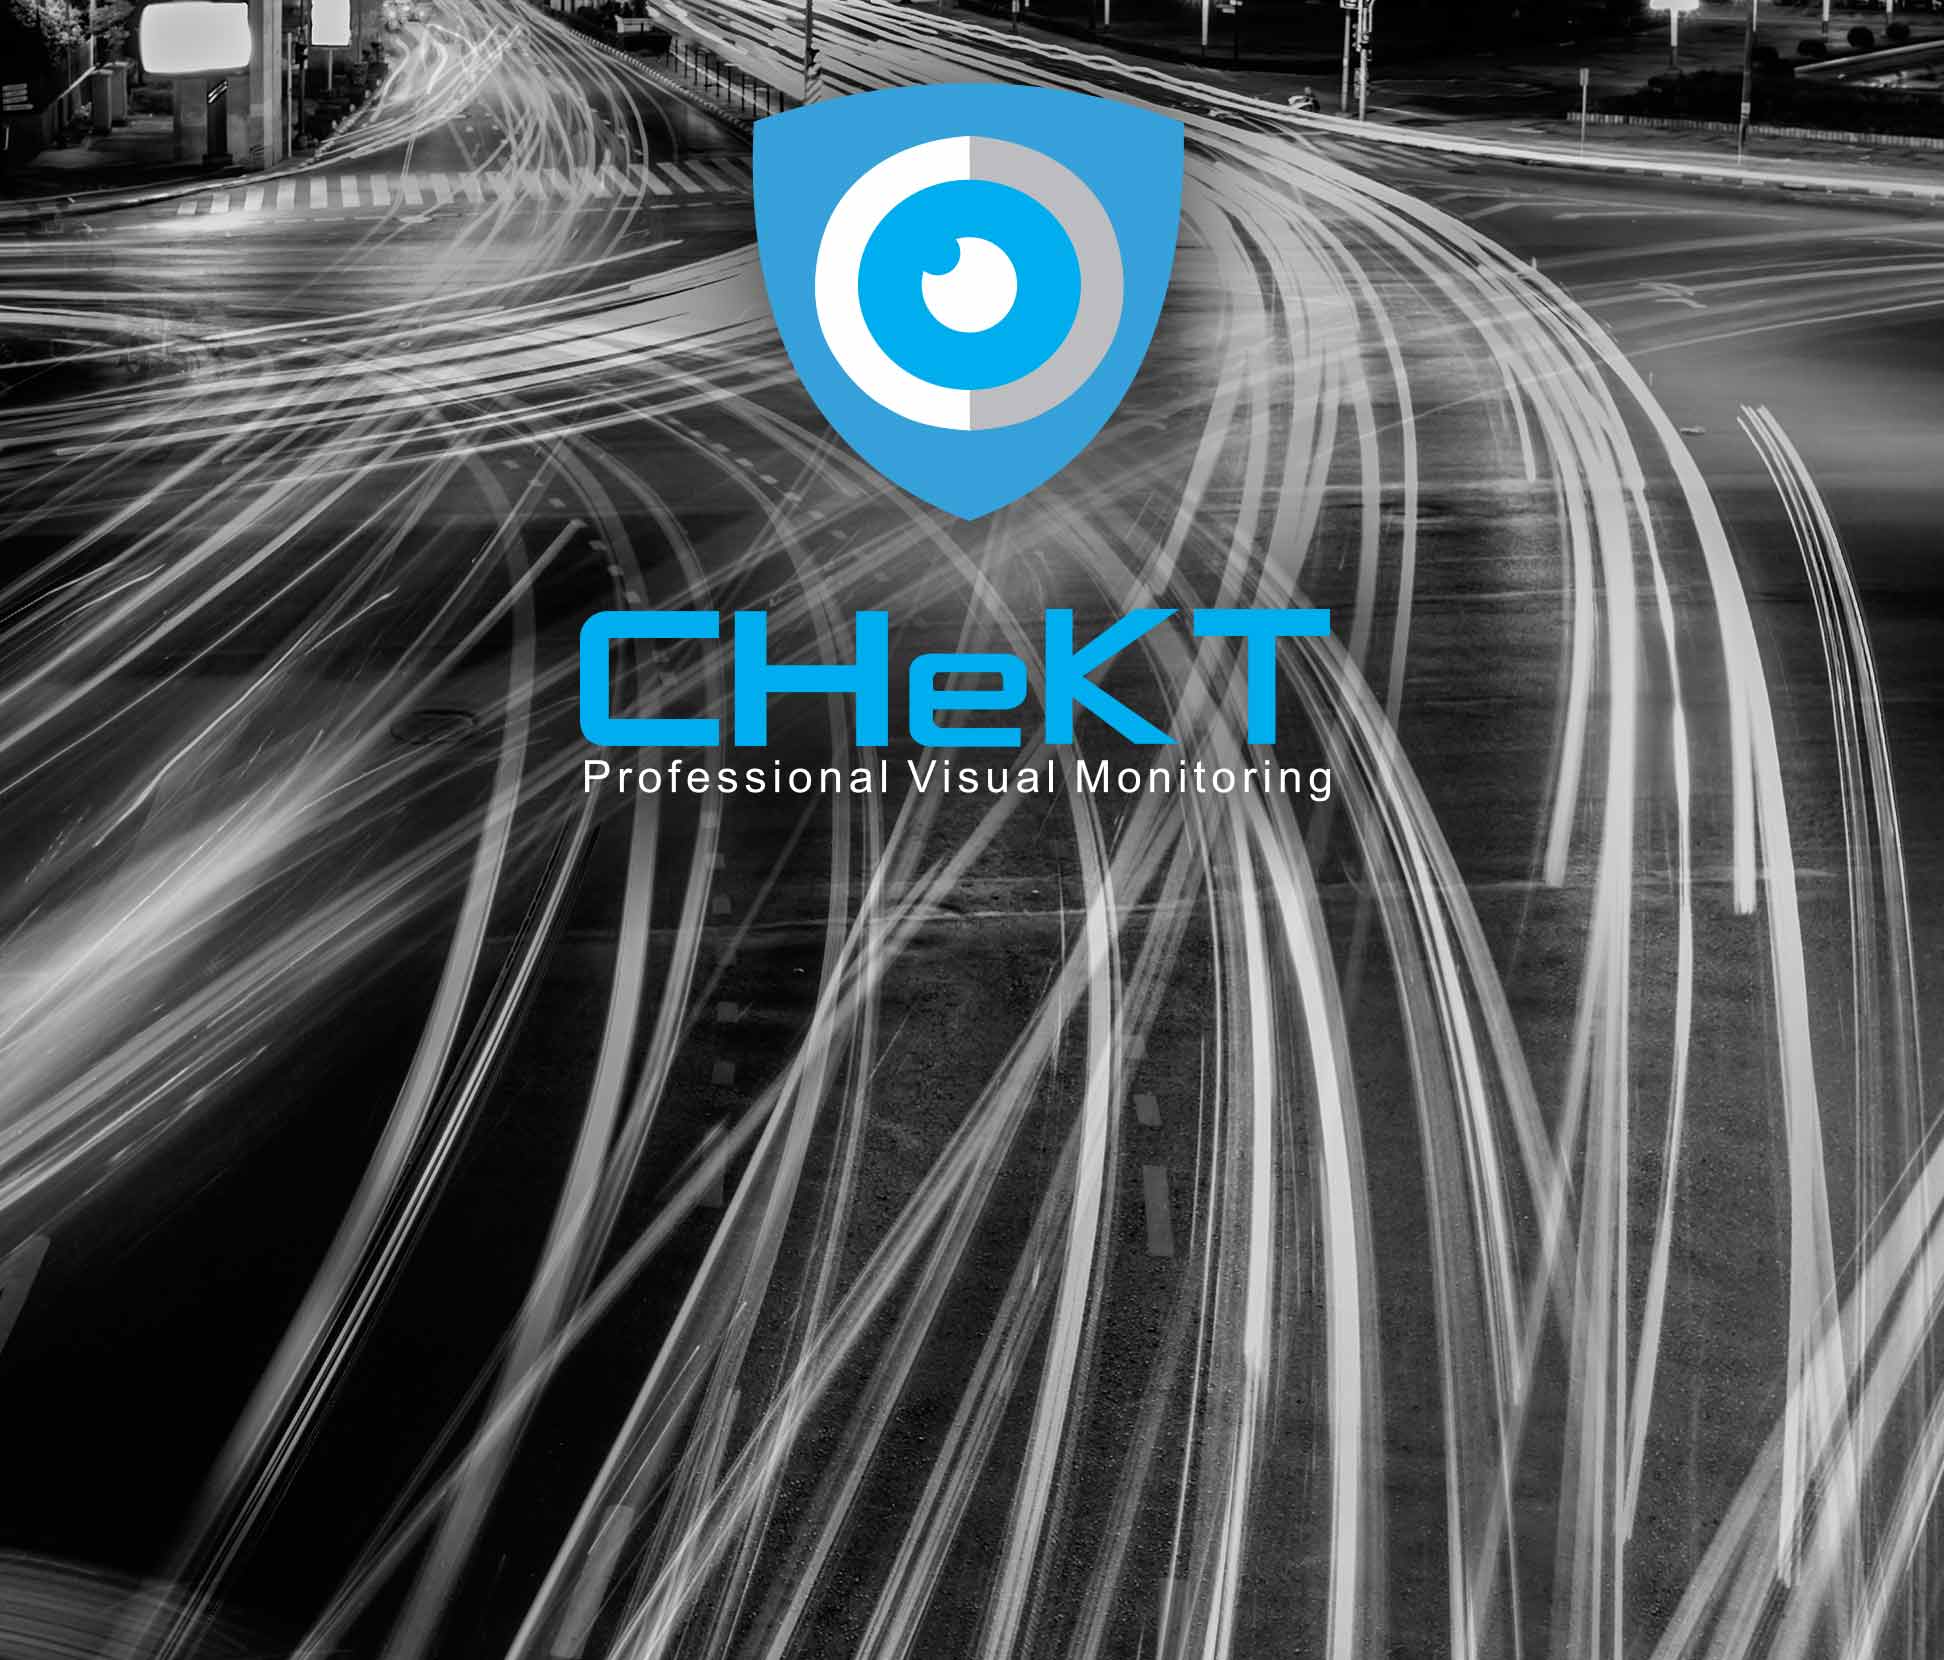 chekt logo with highways in background